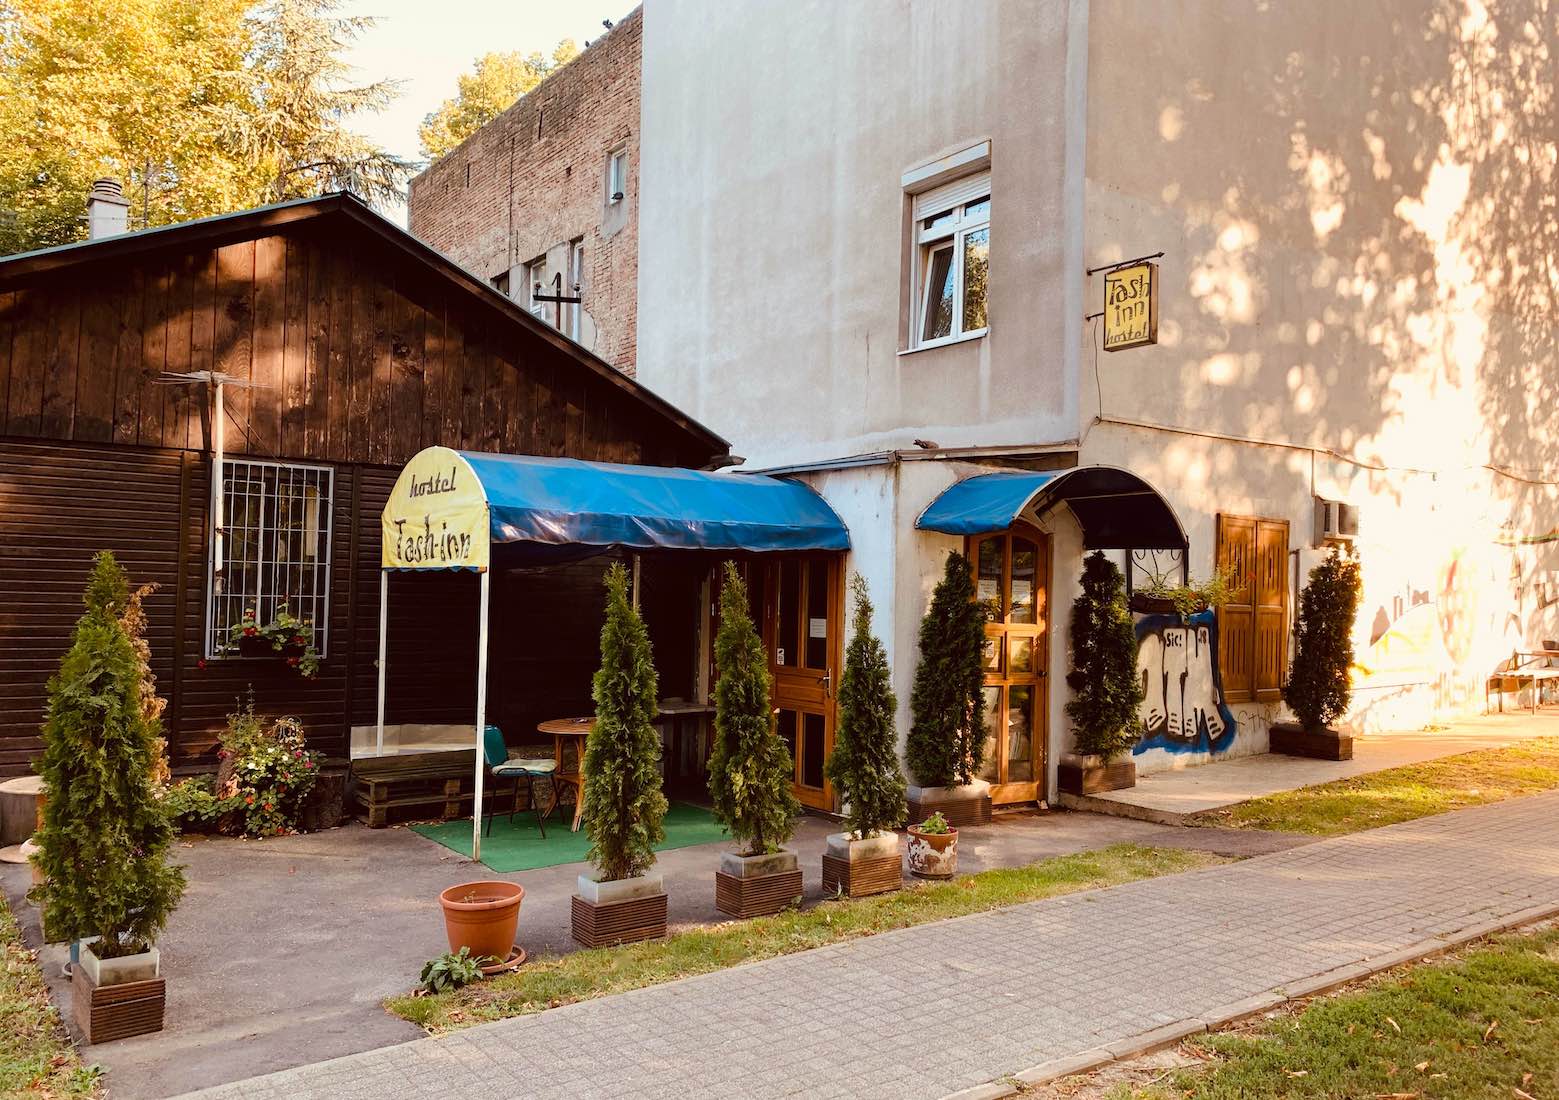 The Tash Inn Hostel in Belgrade.